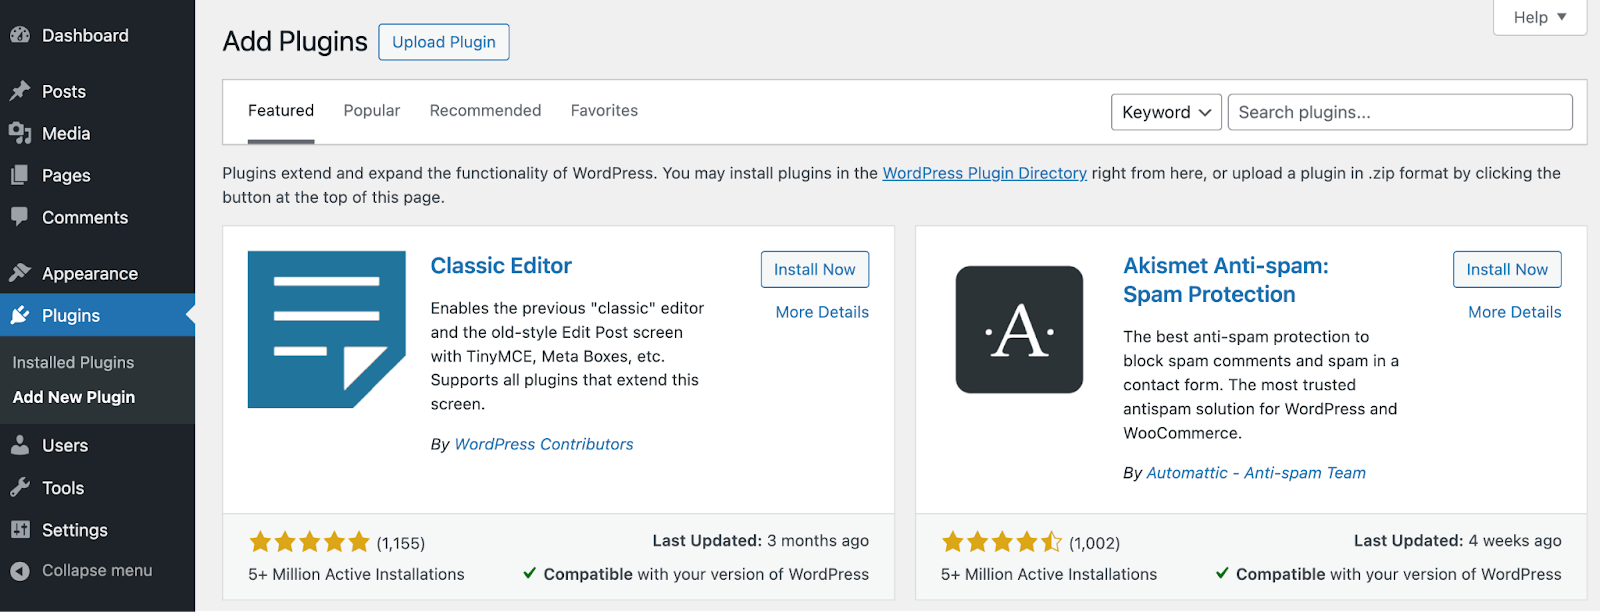 Akismet plugin in the WordPress Plugins section